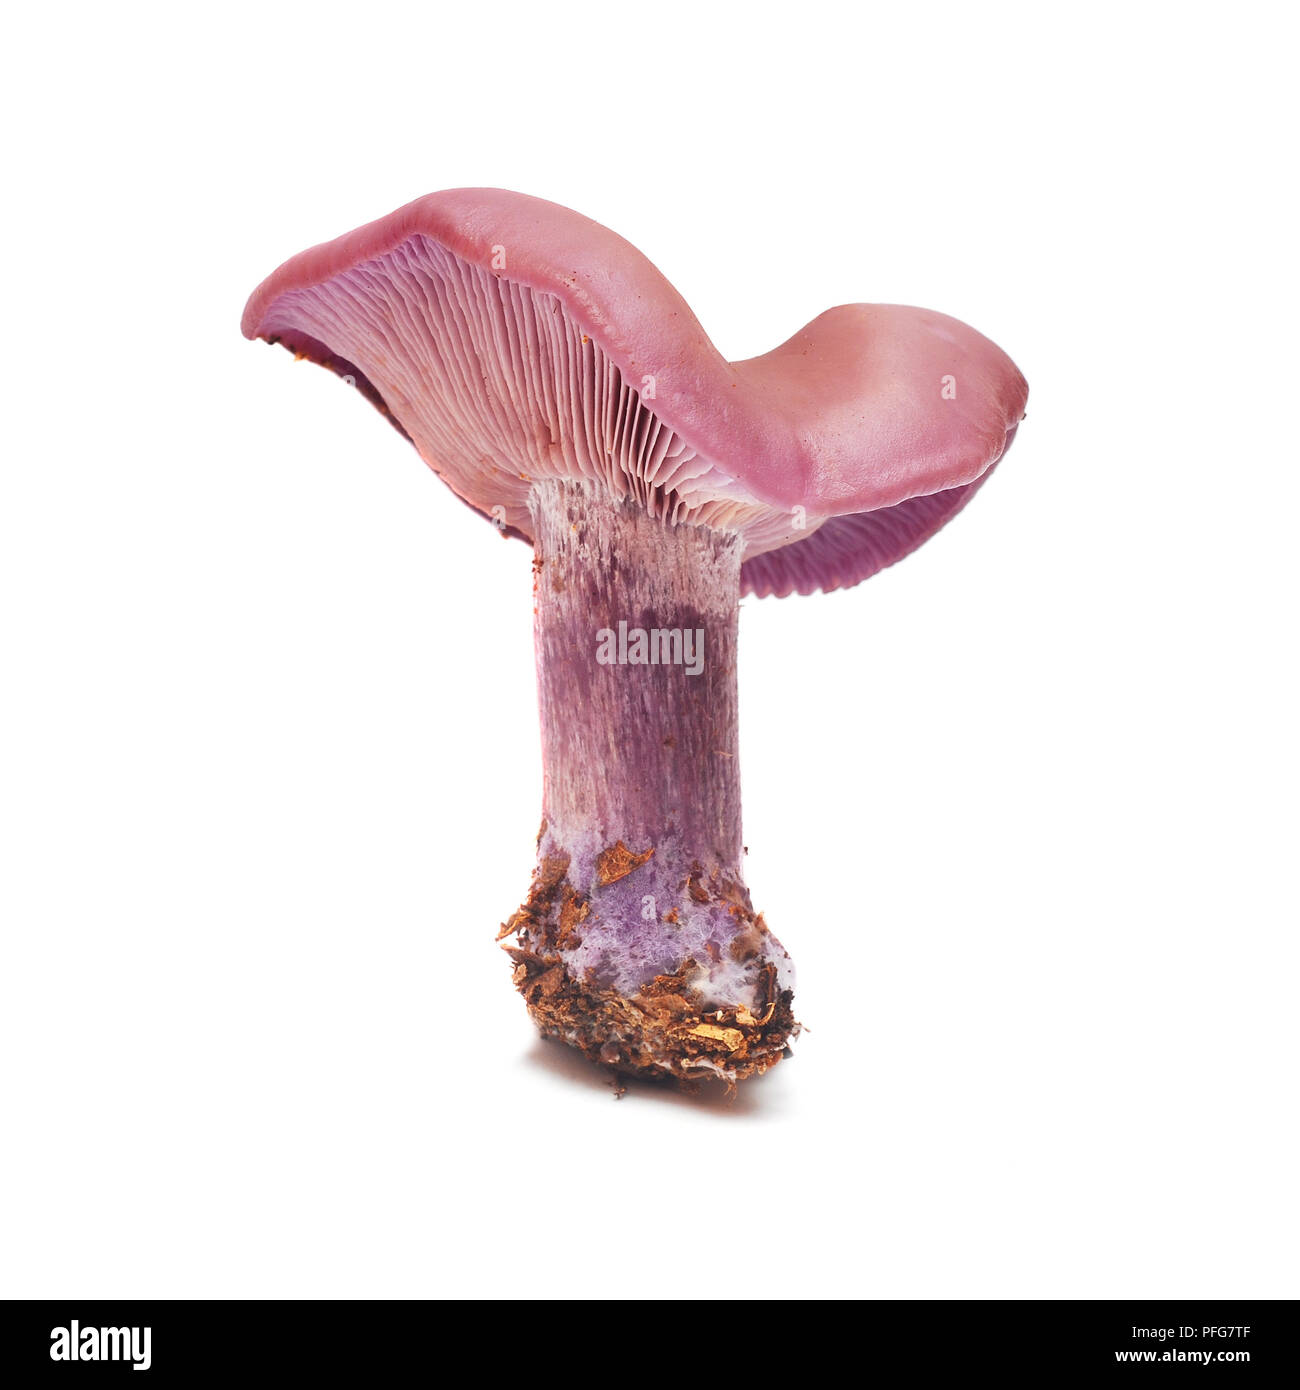 lepista nuda, also clitocybe nuda (wood blewit) mushroom isolated on white Stock Photo